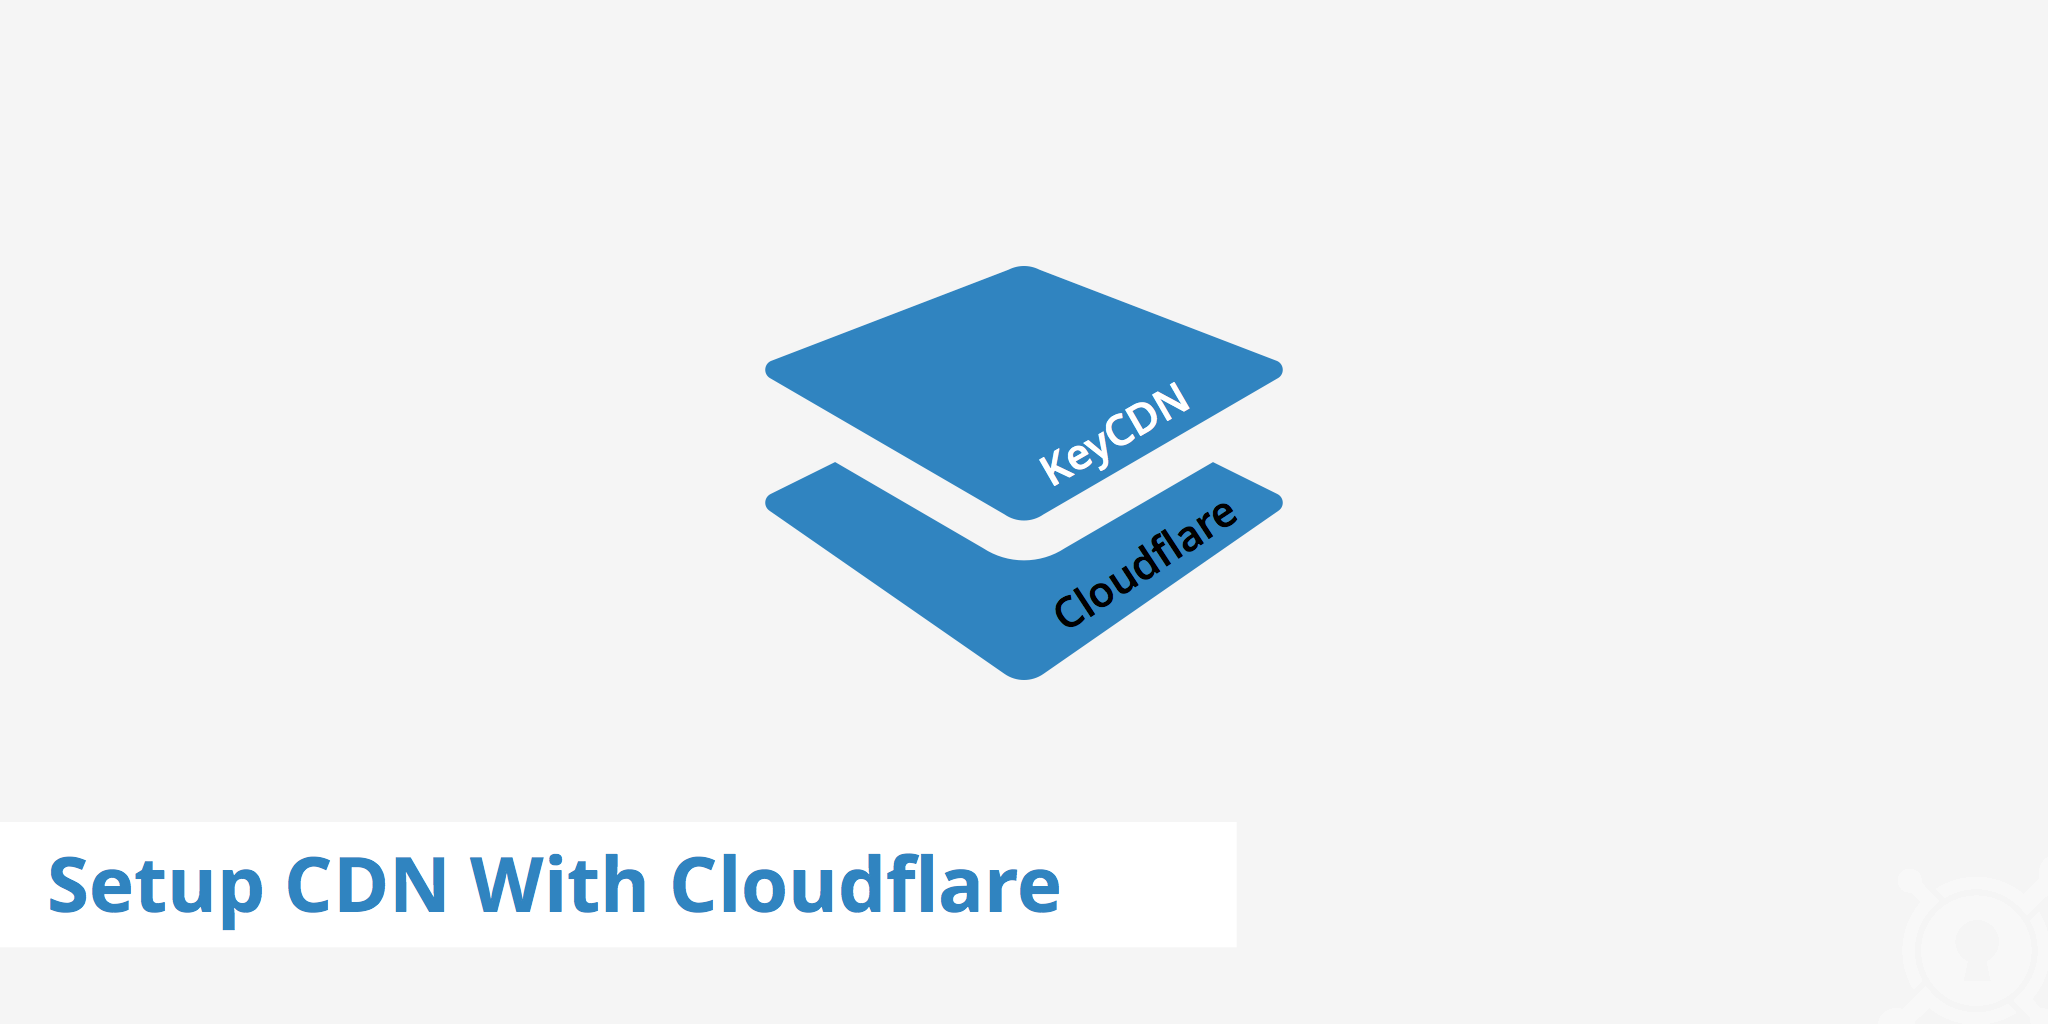 Using a Cloudflare CDN Setup - 3 Easy Steps